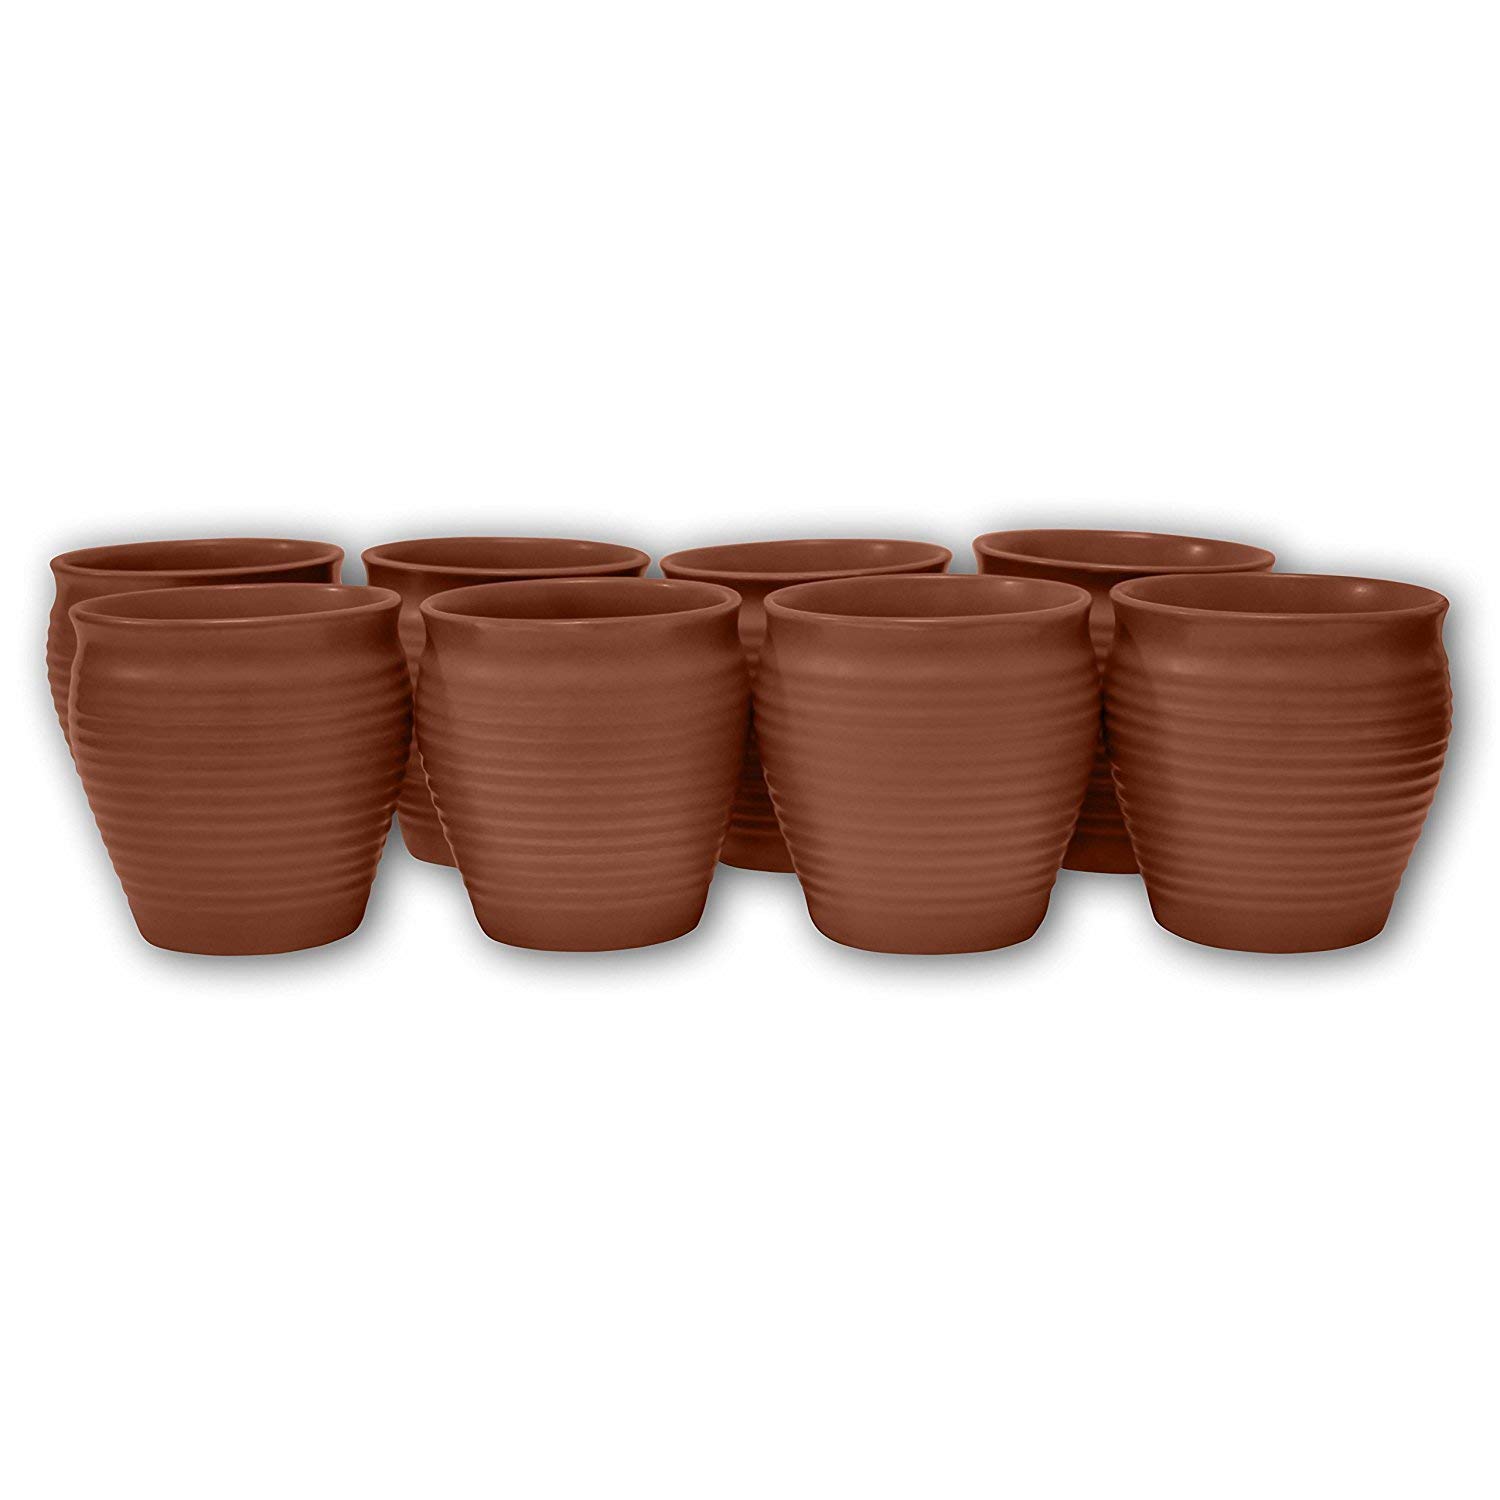 Artisansorissa Reusable Natural Clay Mud Kulhad Kullad Tea Coffee Cup Set of 6 for Health Benifit 160ml